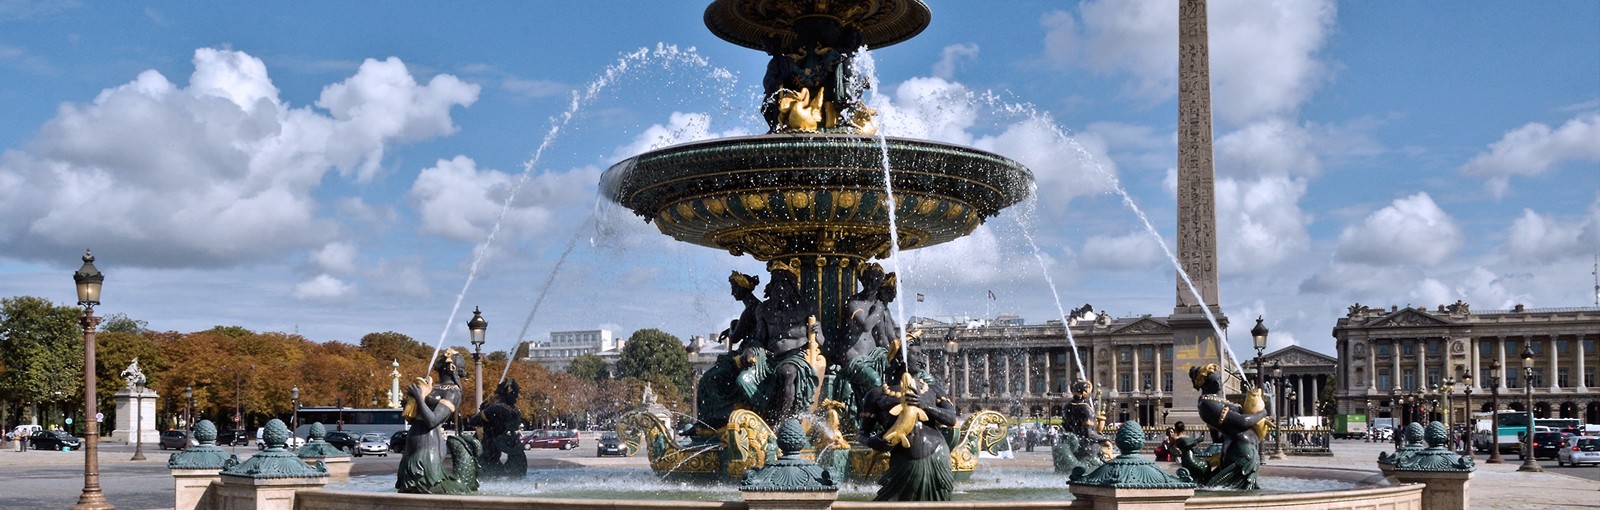 Tours 游览巴黎 - 巴黎市区游 - 巴黎游